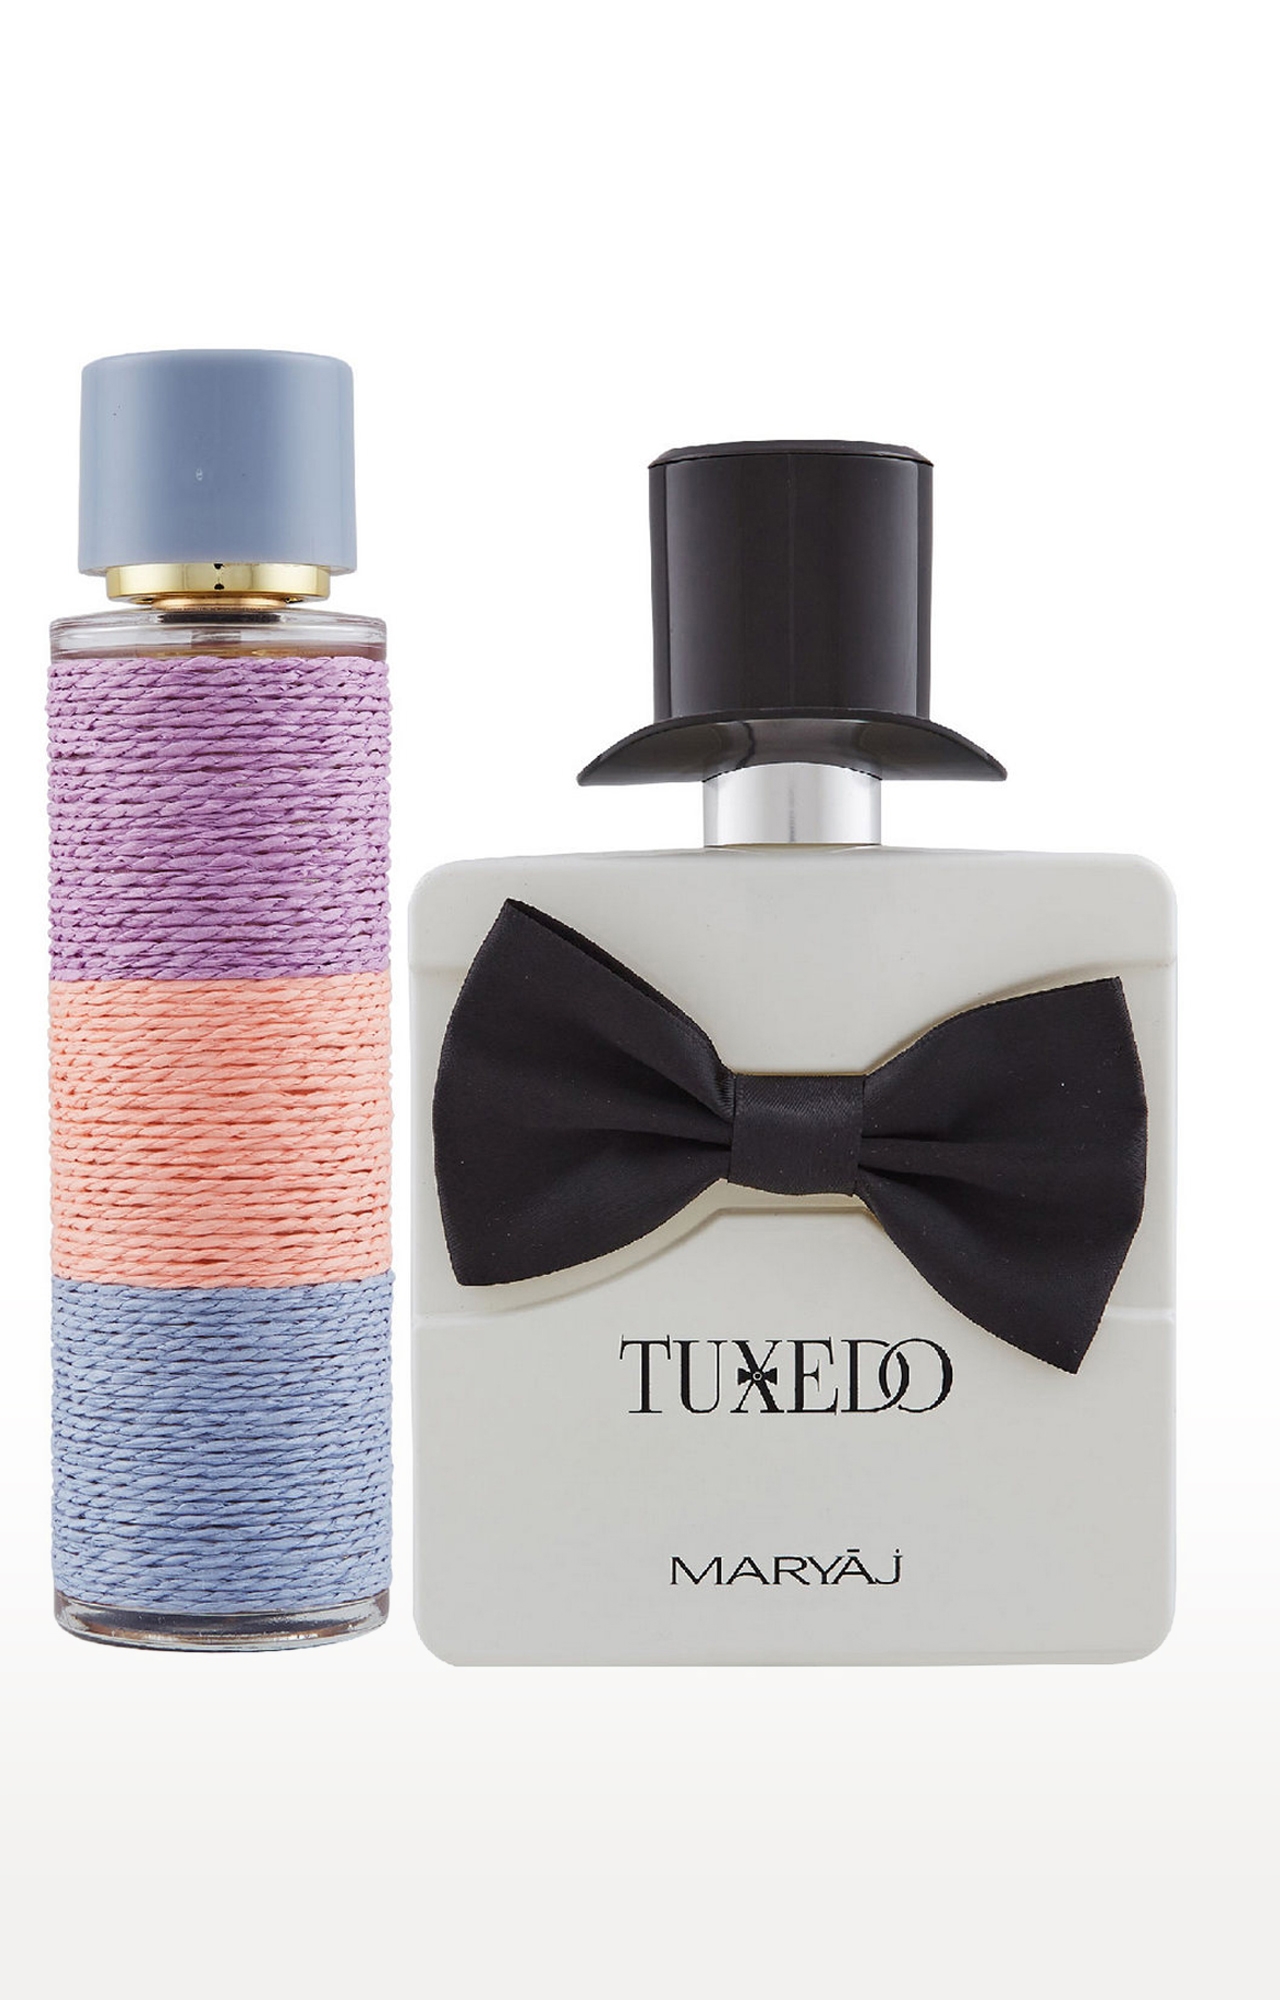 Maryaj | Maryaj Deuce Femme Eau De Parfum Fruity Perfume 100ml for Women and Maryaj Tuxedo Eau De Parfum Perfume 100ml for Men 0